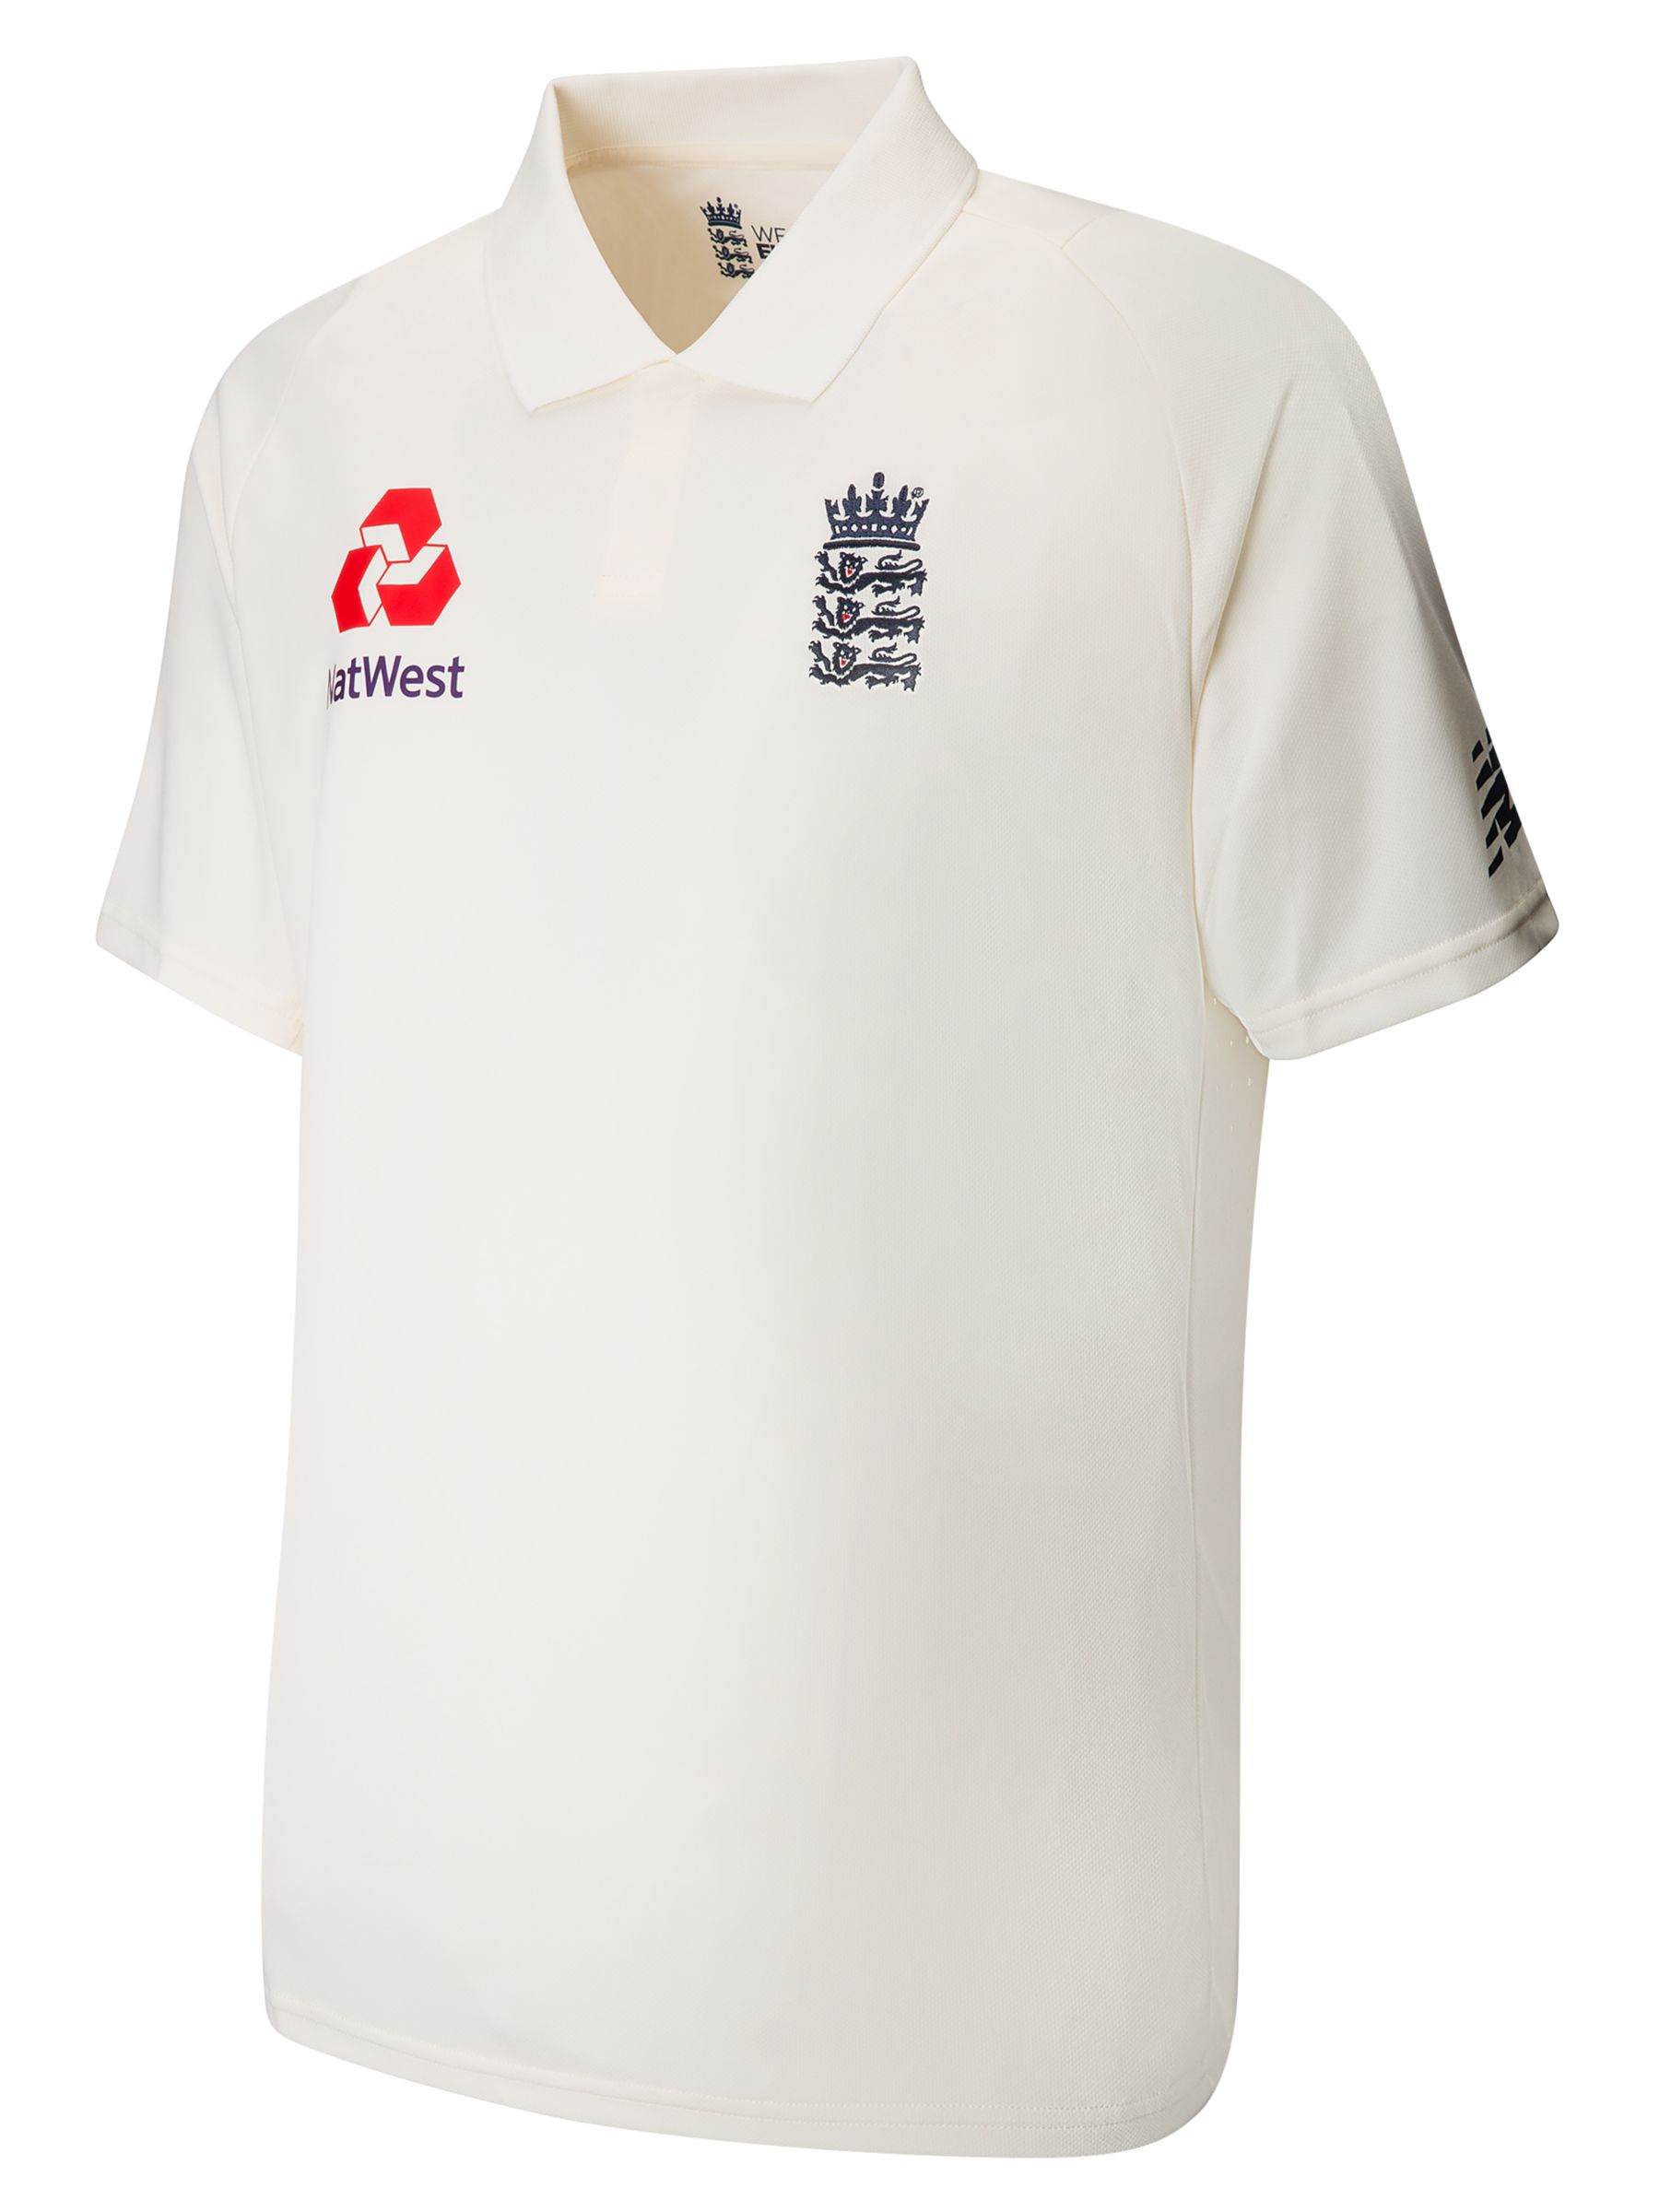 england cricket white jersey